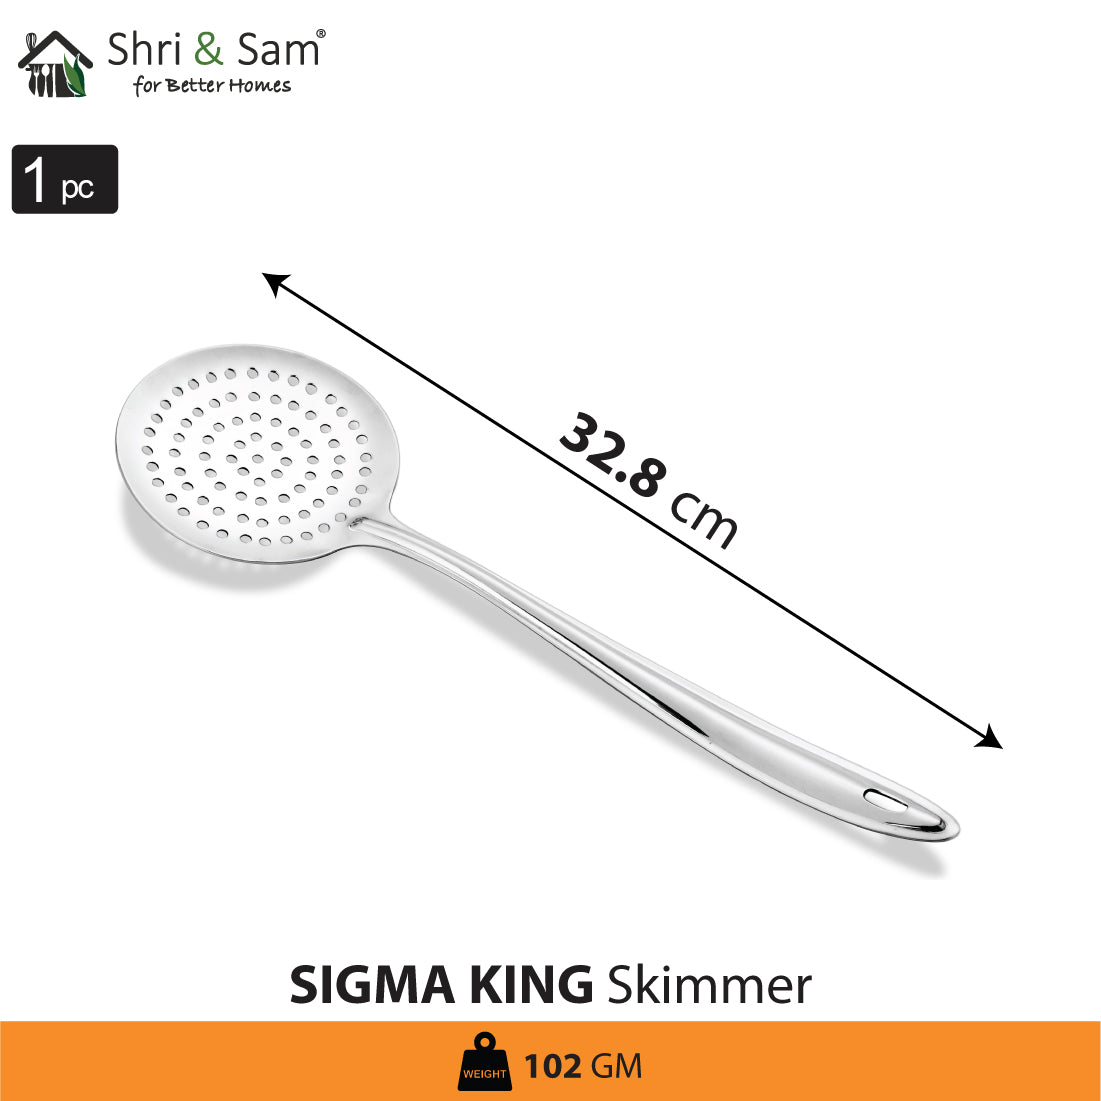 Stainless Steel Skimmer Sigma King